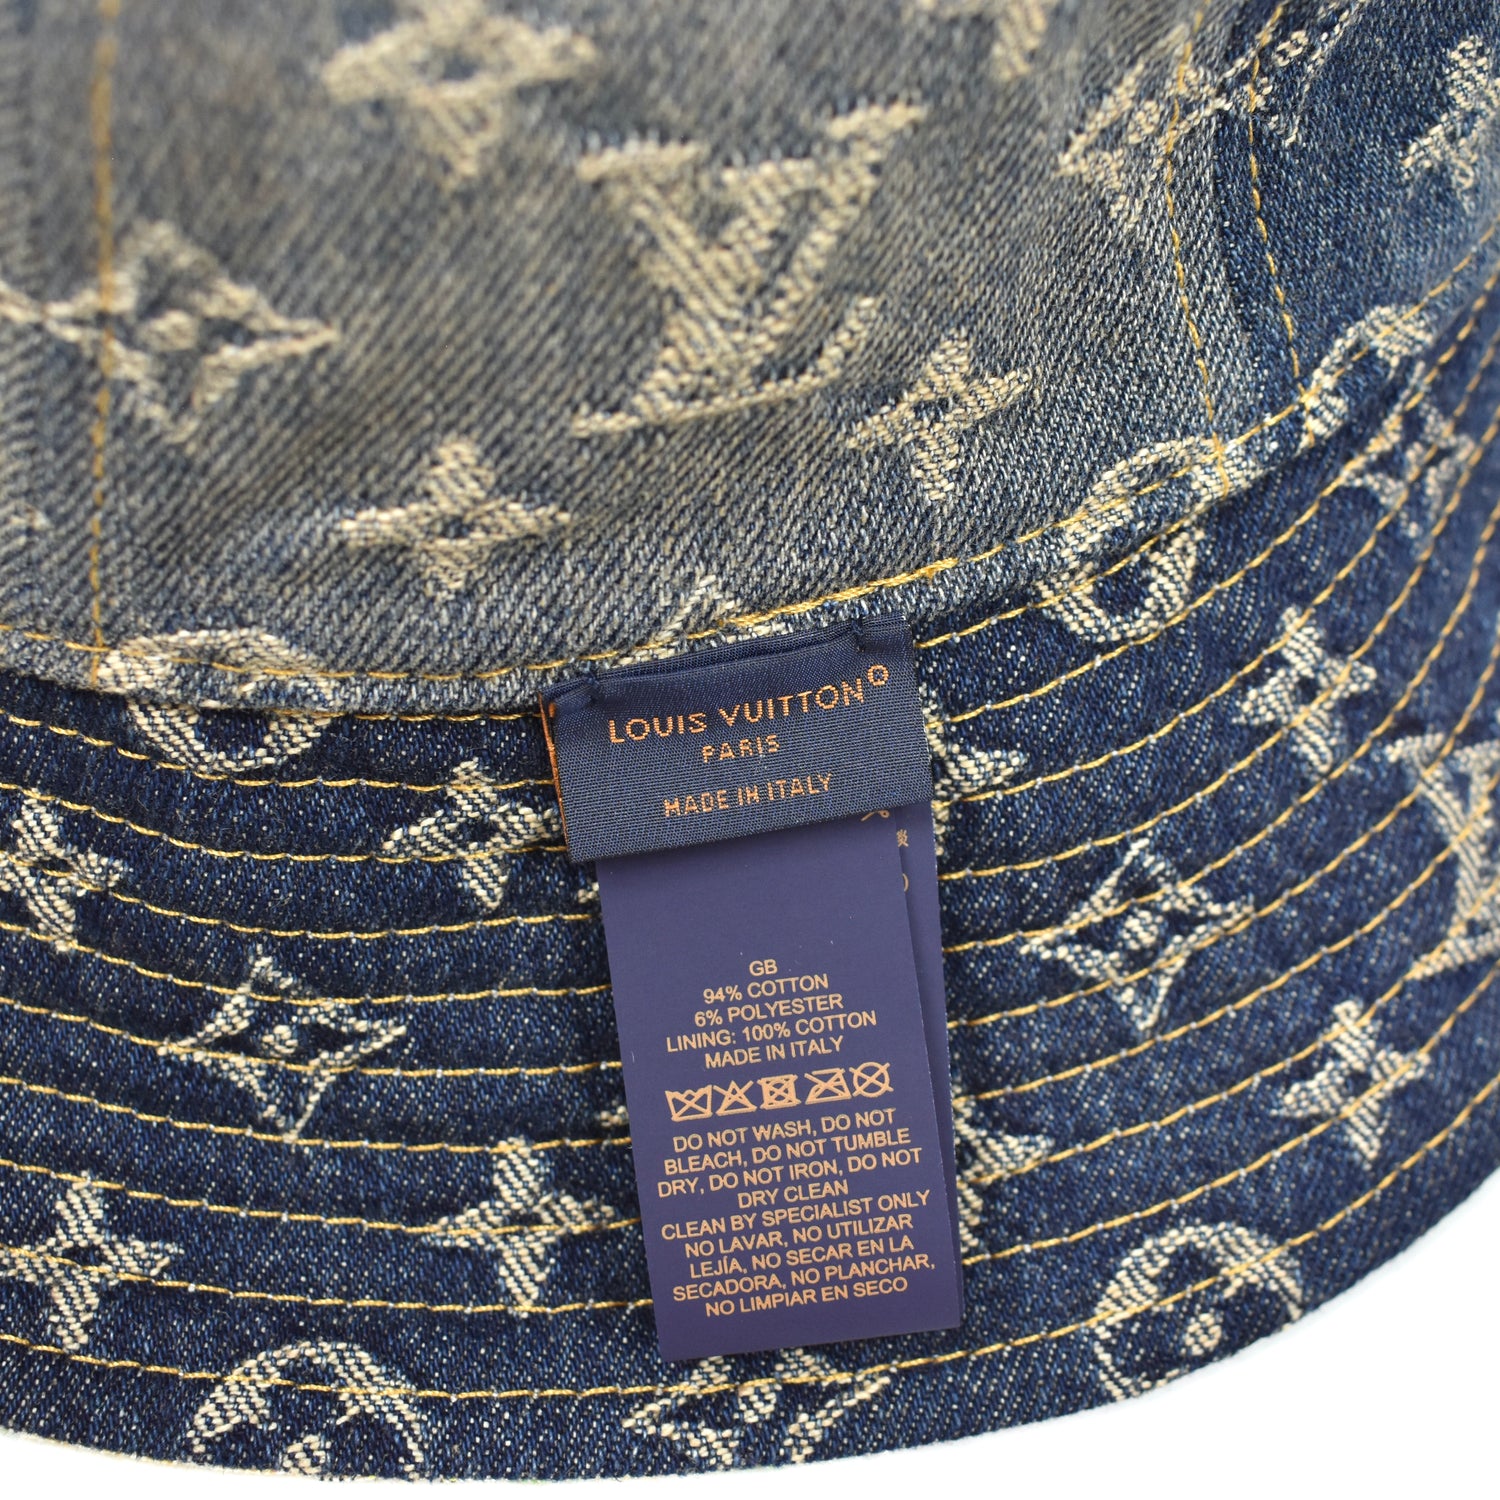 Shop Louis Vuitton MONOGRAM Street Style Bucket Hats Wide-brimmed